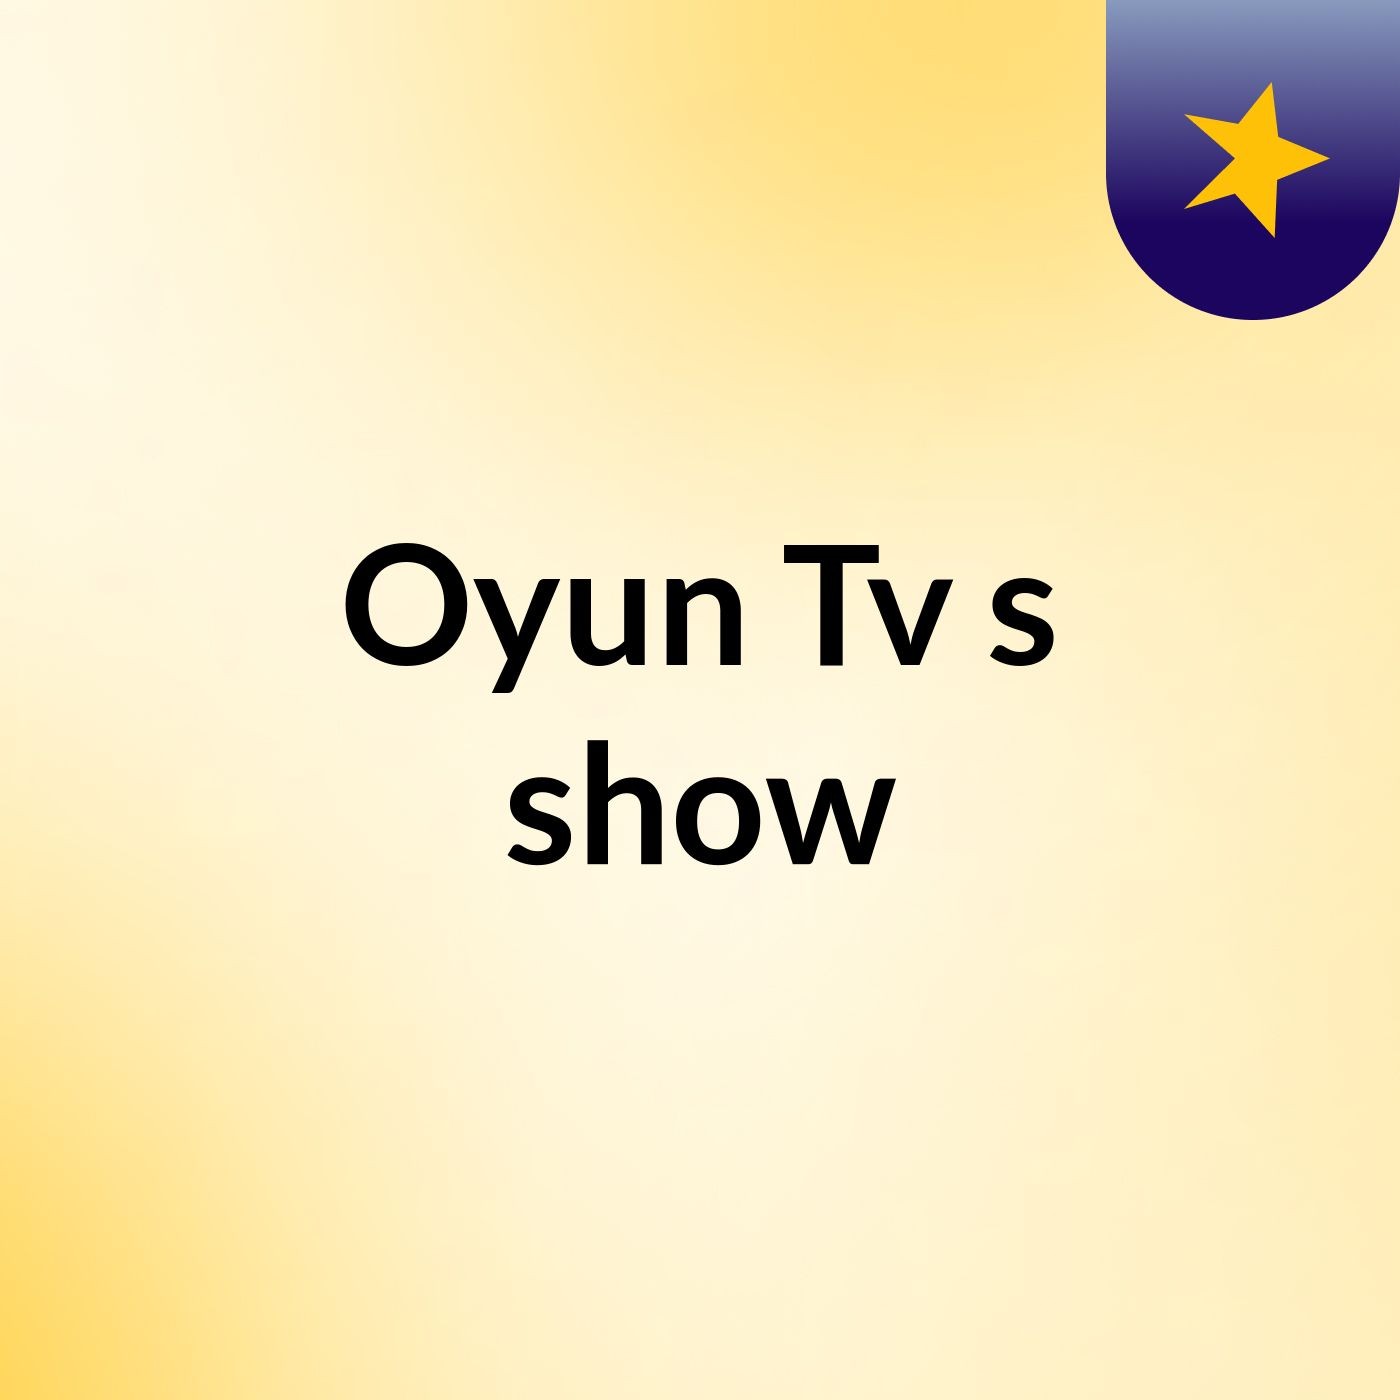 Oyun Tv's show